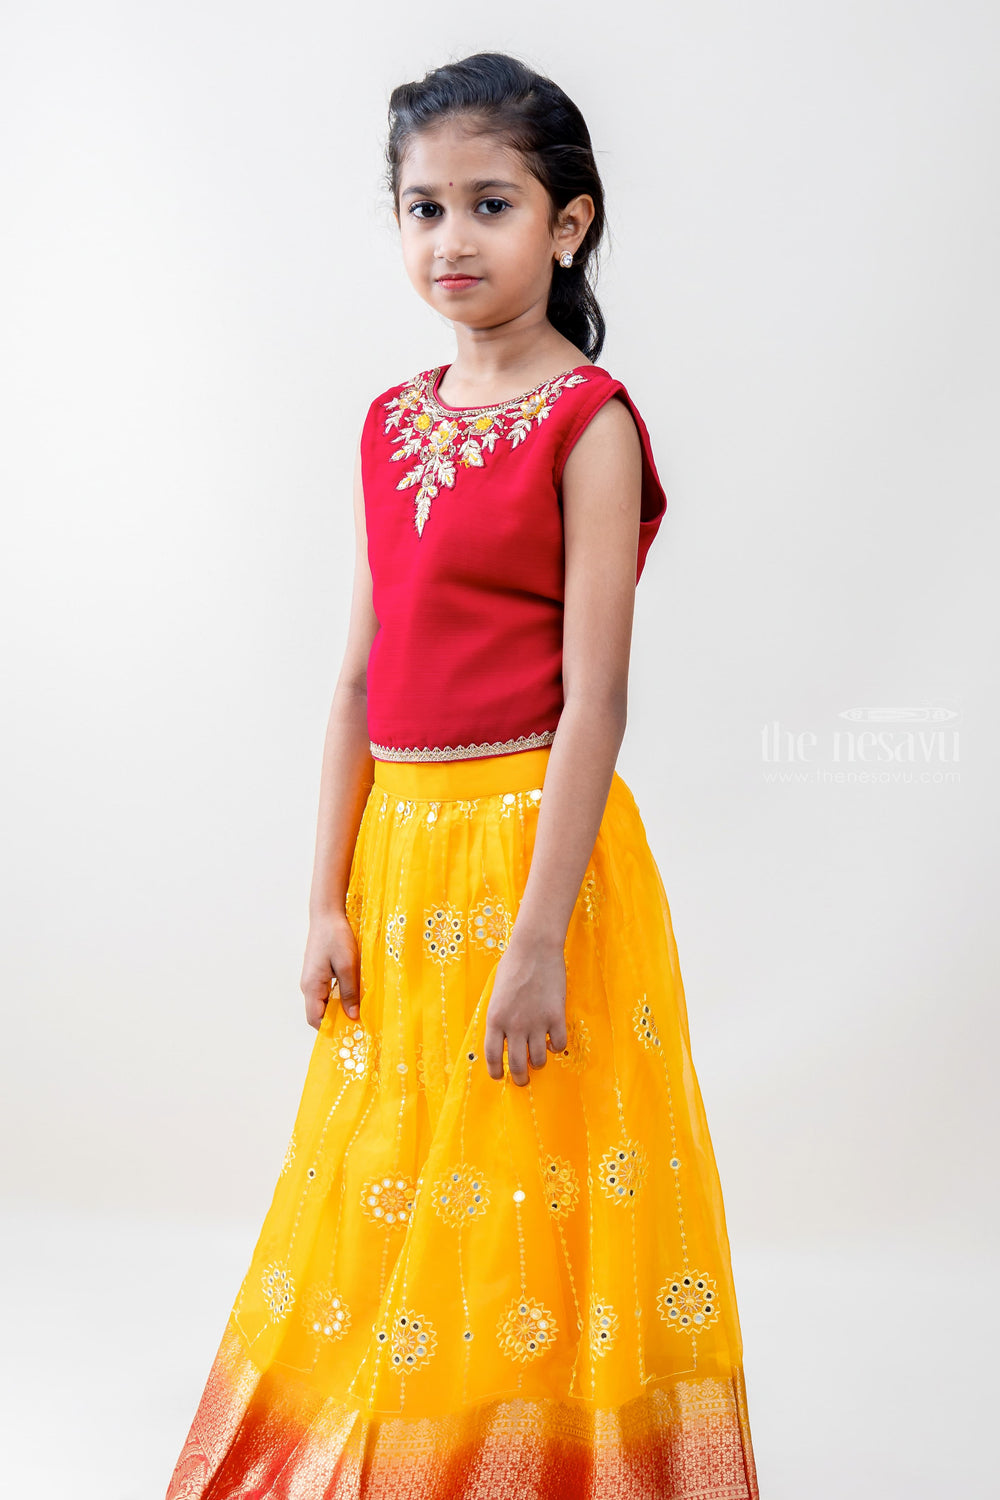 The Nesavu Lehenga & Ghagra Ravishing Princess - Neck-only Embroidery Red Crop Top With Yellow Skirt And Pink Border psr silks Nesavu